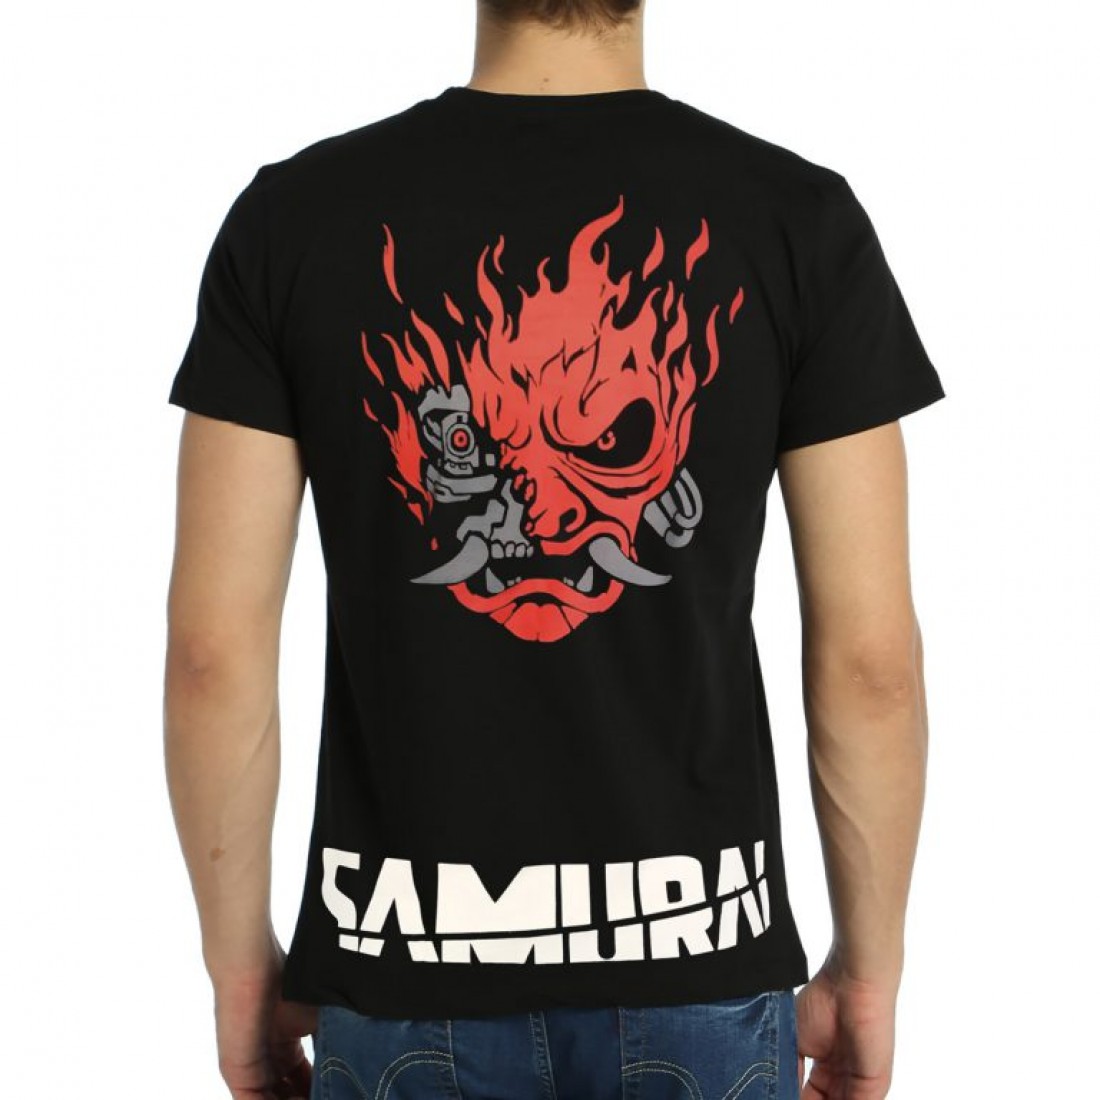 Cyberpunk samurai t shirt фото 13